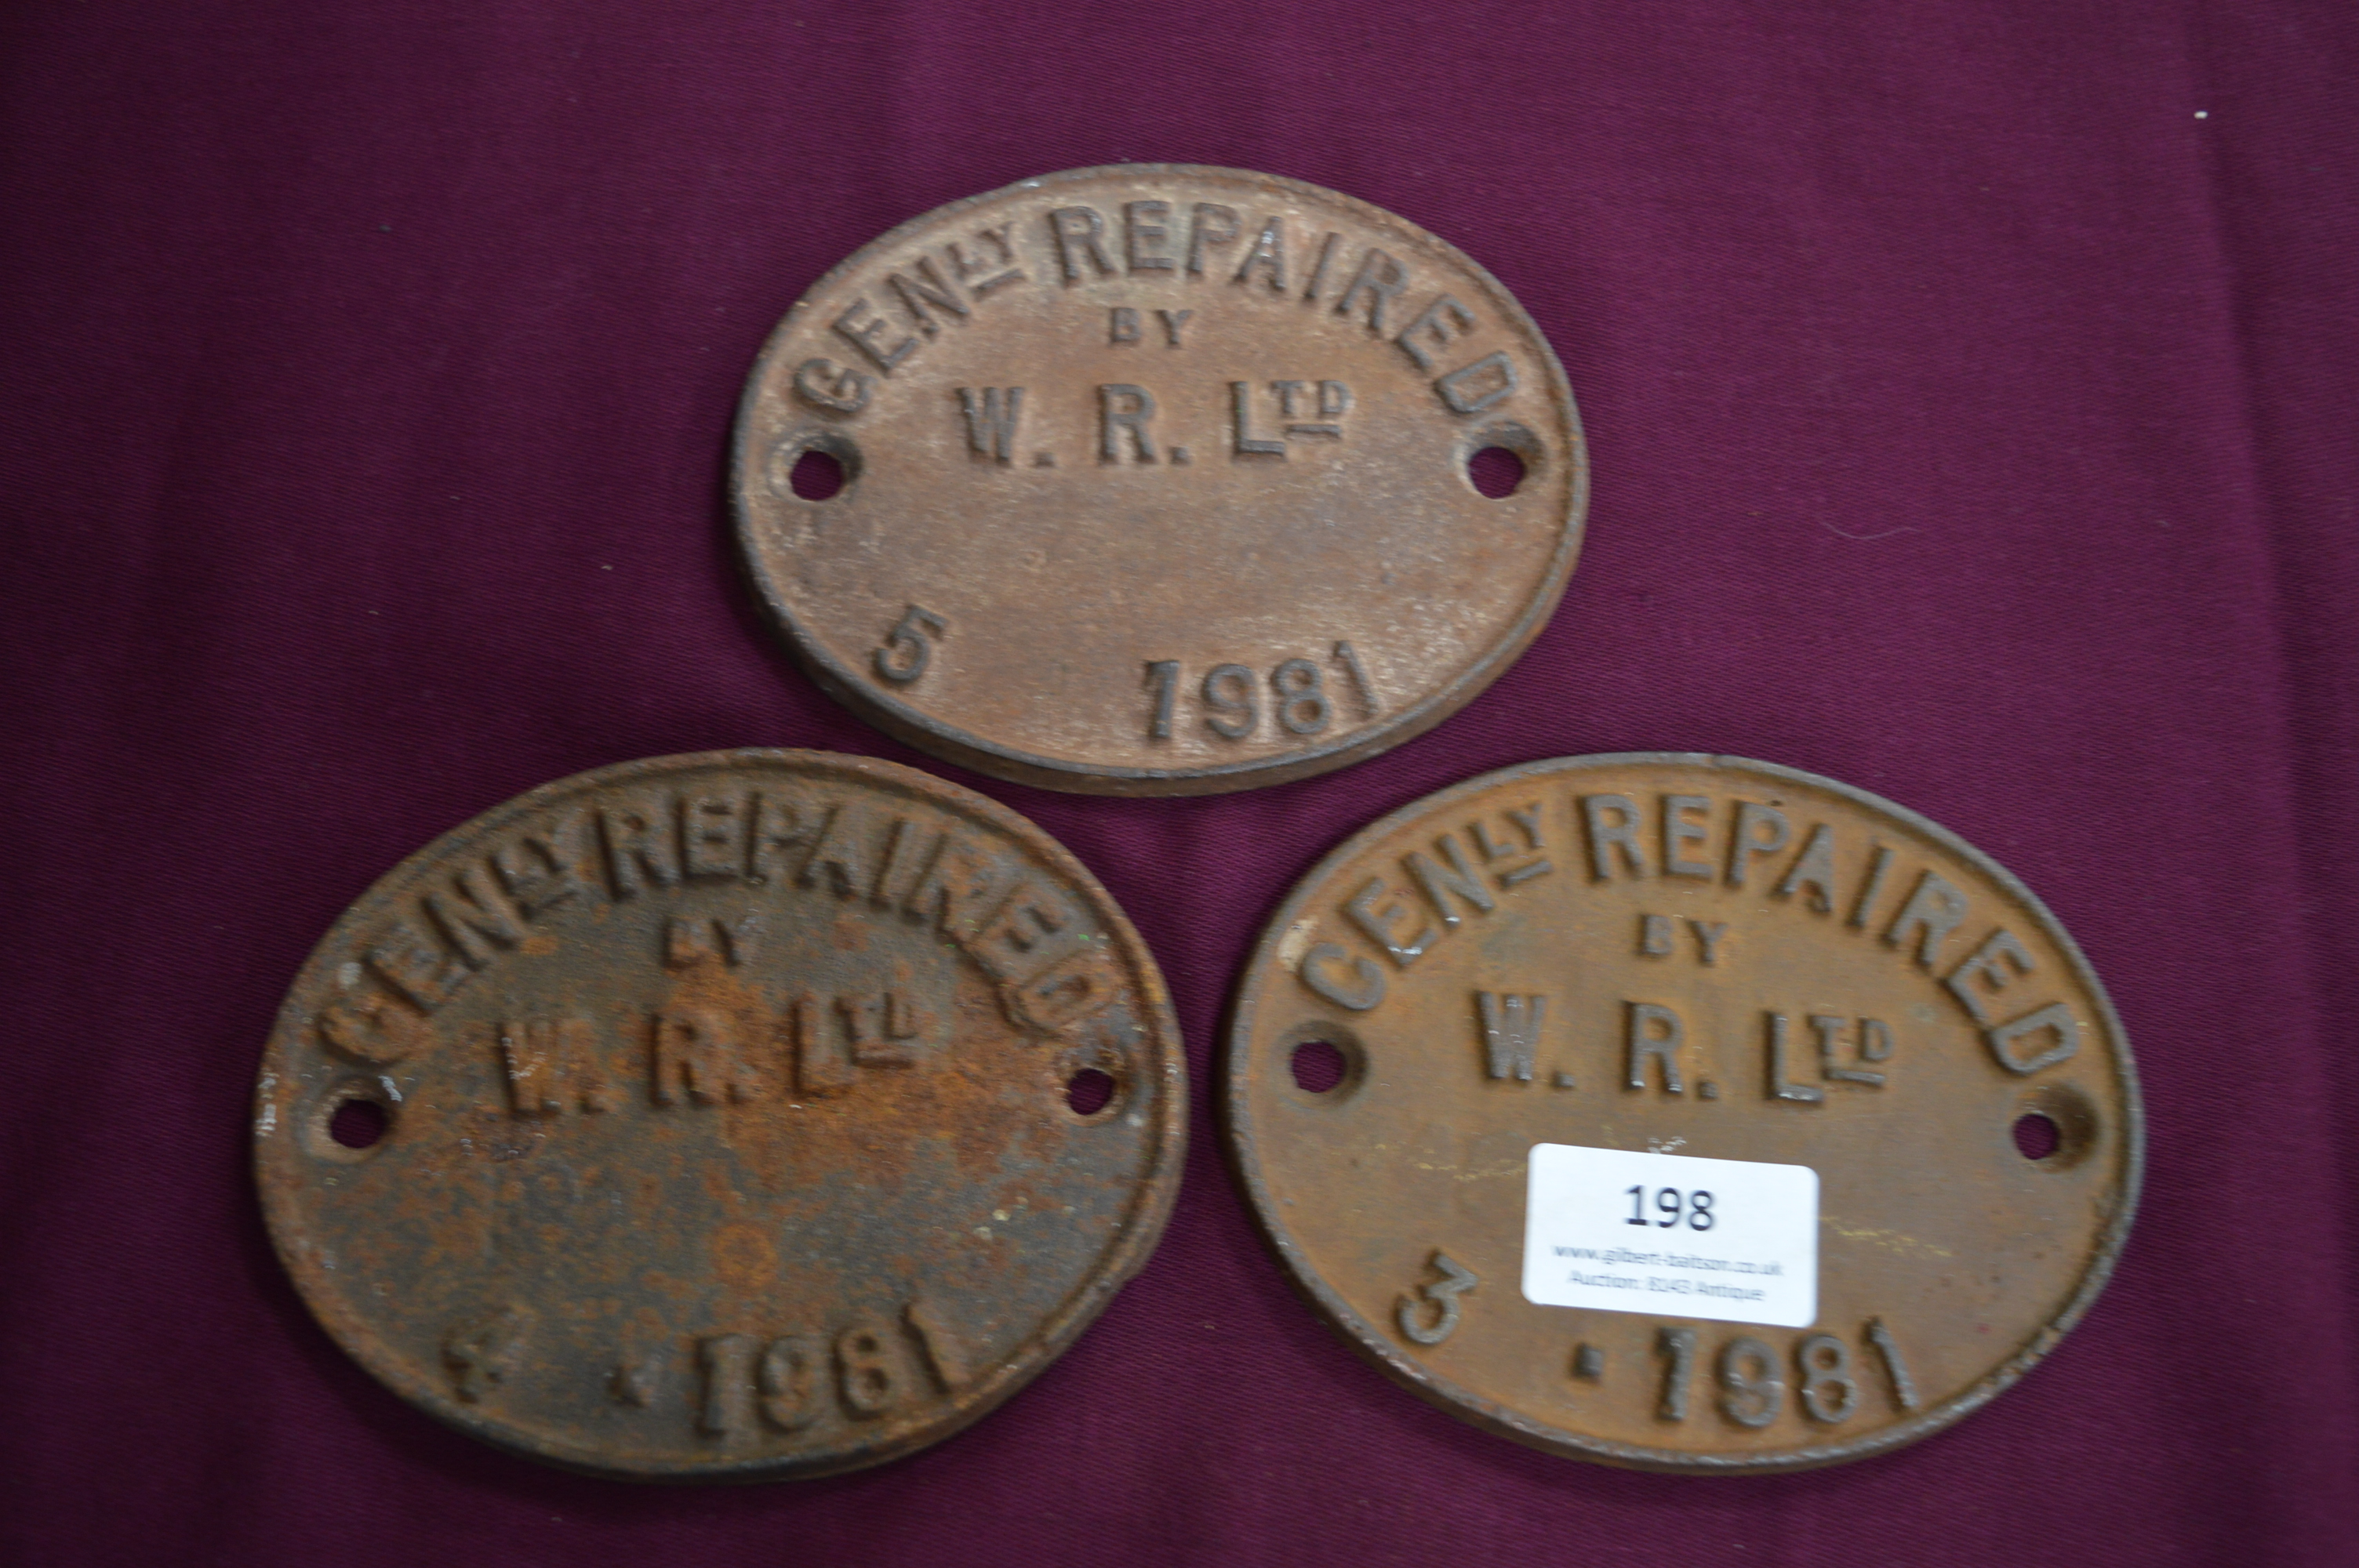 Three Railway Repair Plates